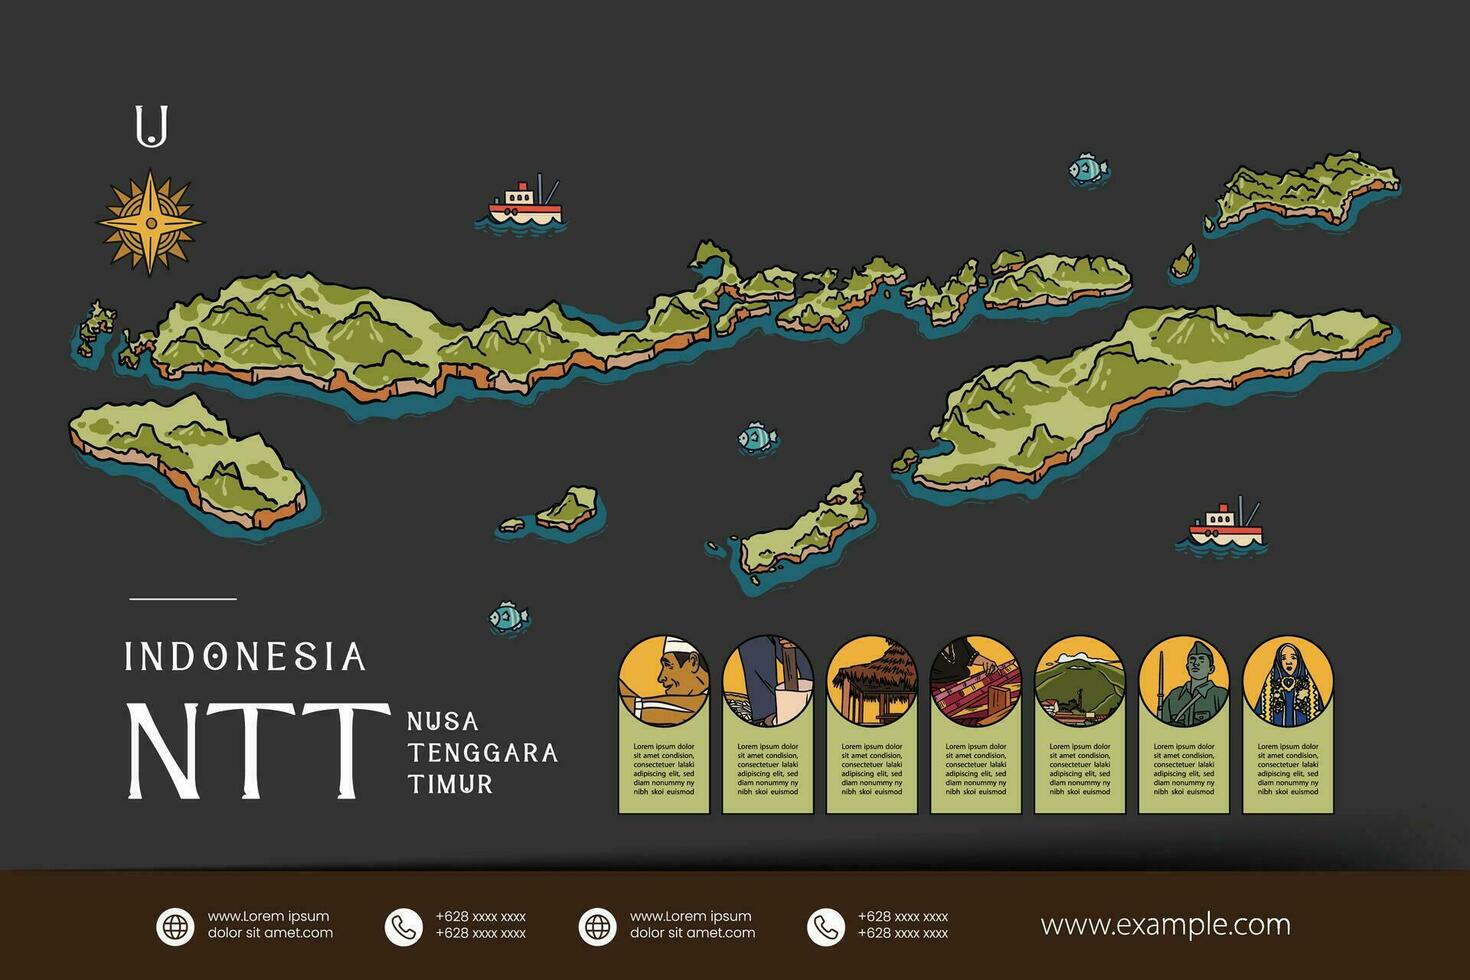 East Nusa Tenggara Indonesia maps illustration. Indonesia Island design layout vector